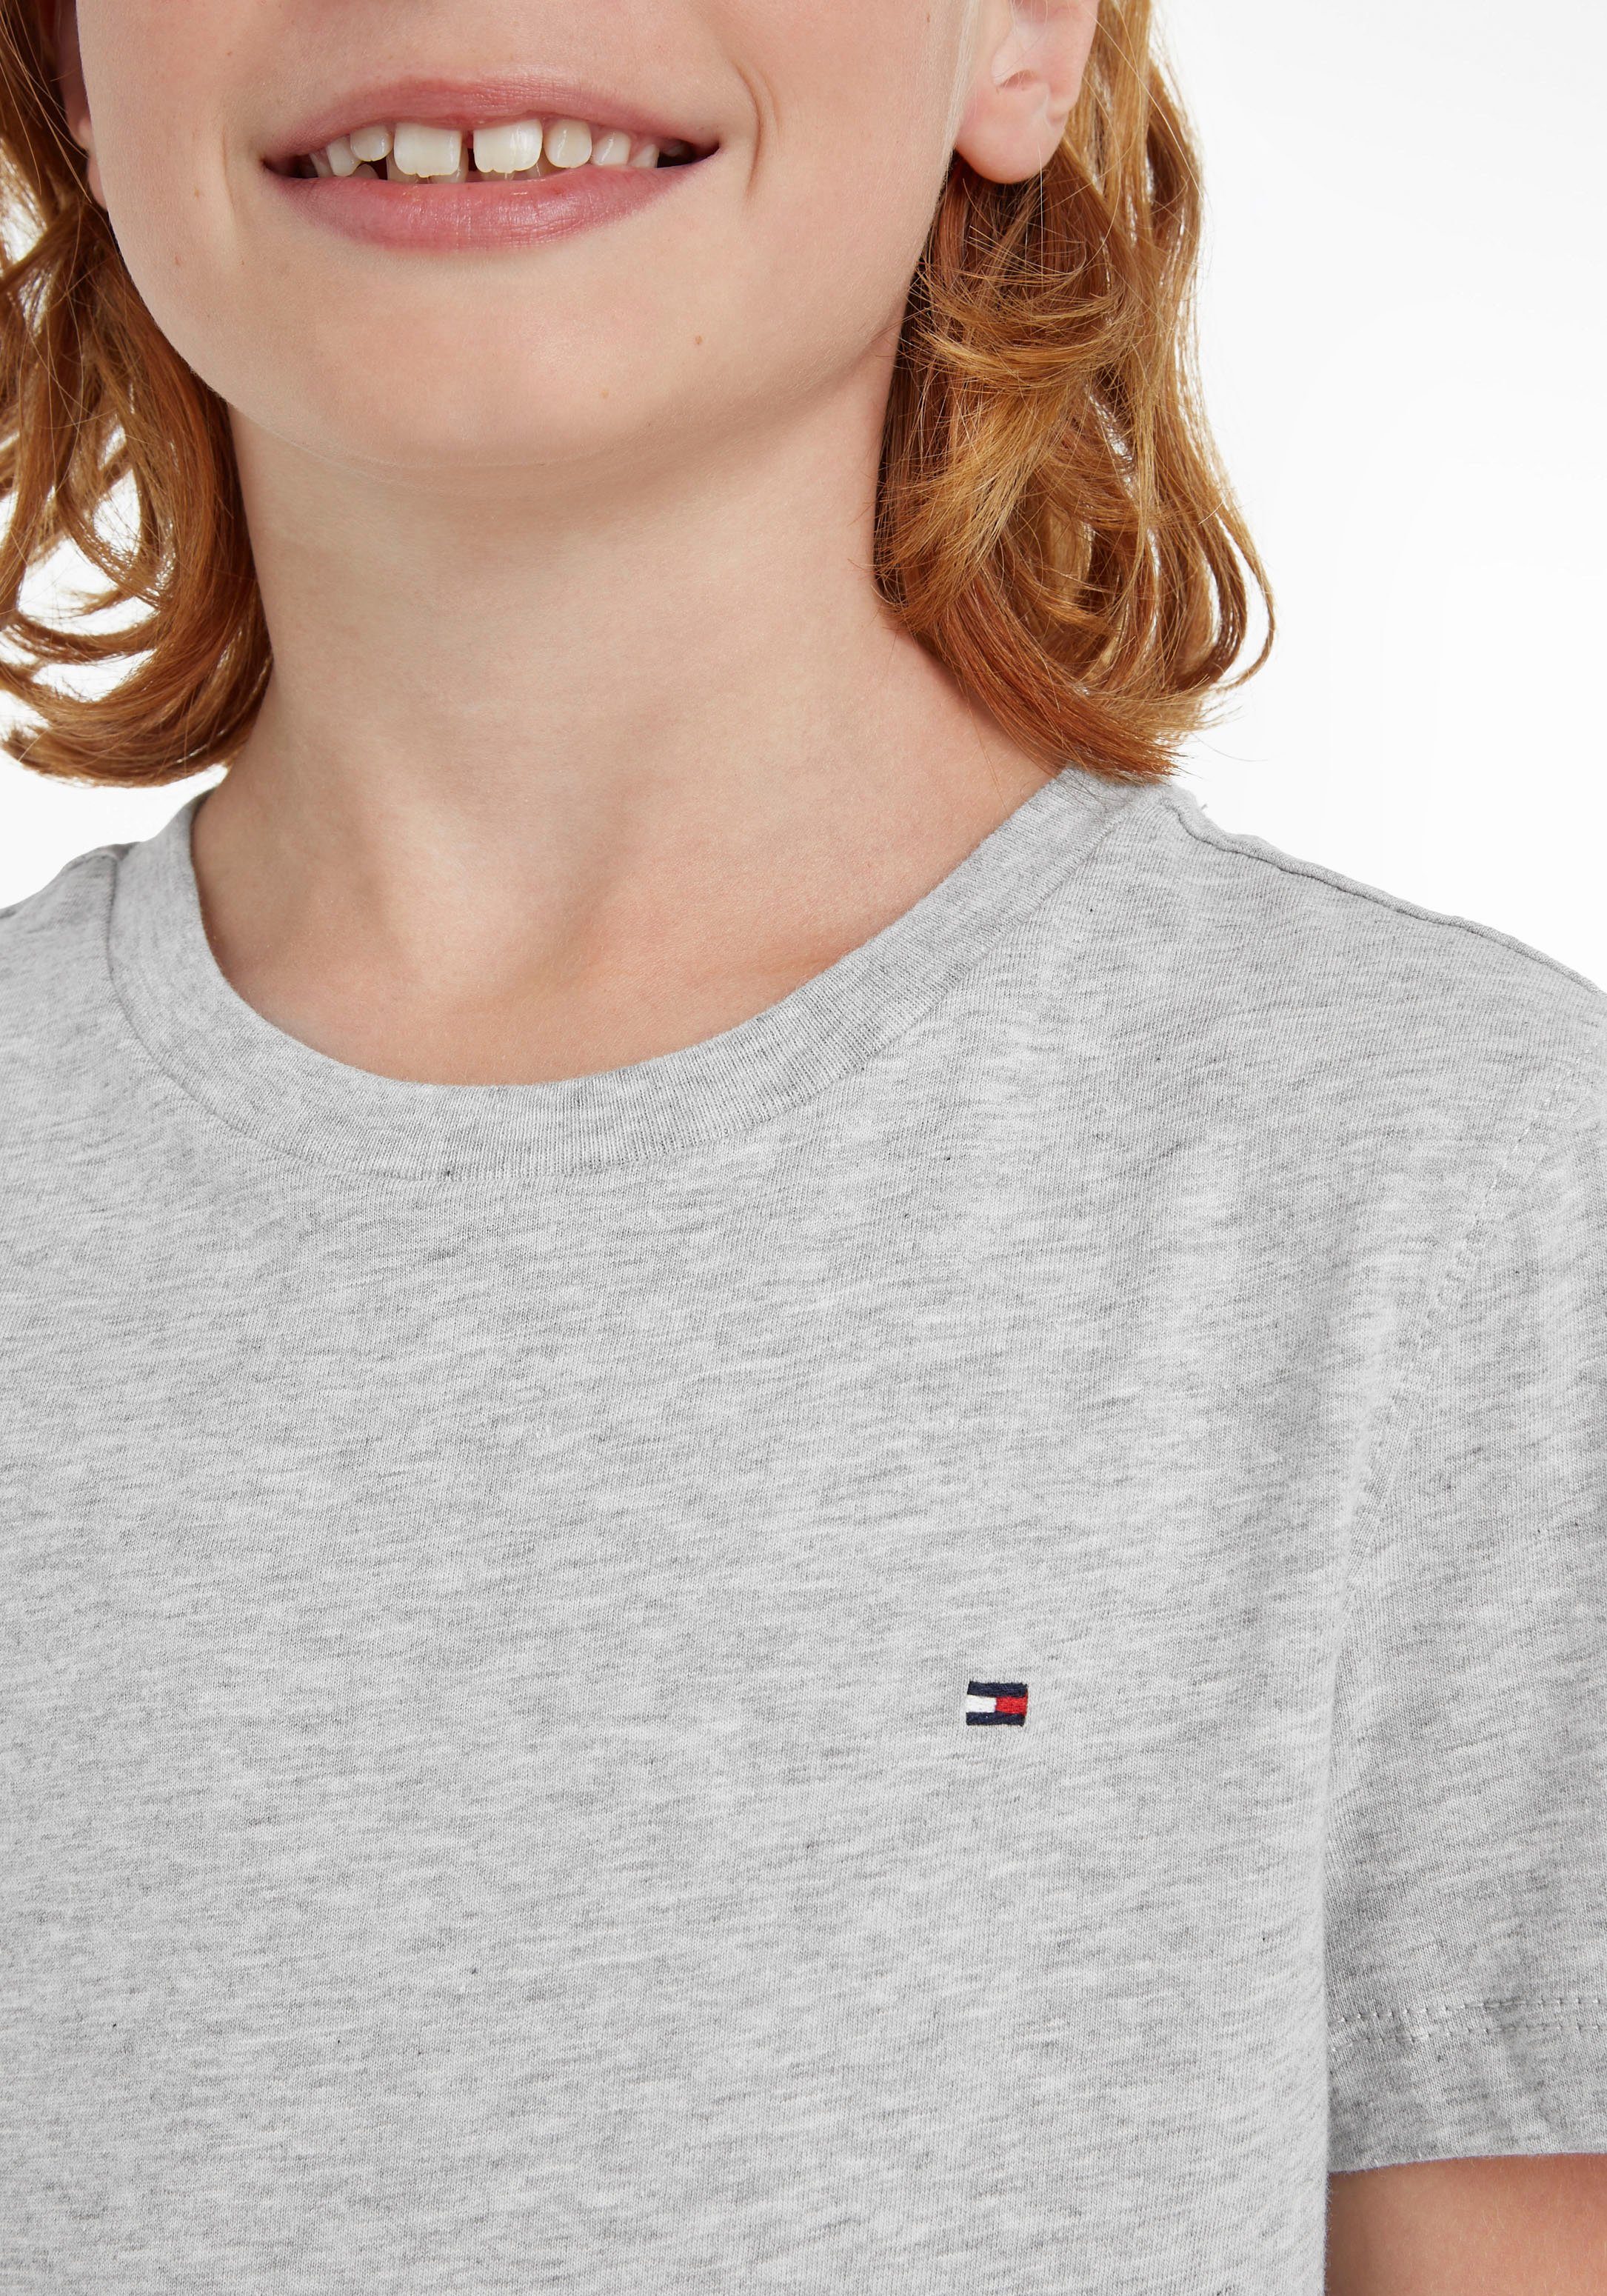 KNIT BASIC Tommy für CN T-Shirt BOYS Jungen Hilfiger